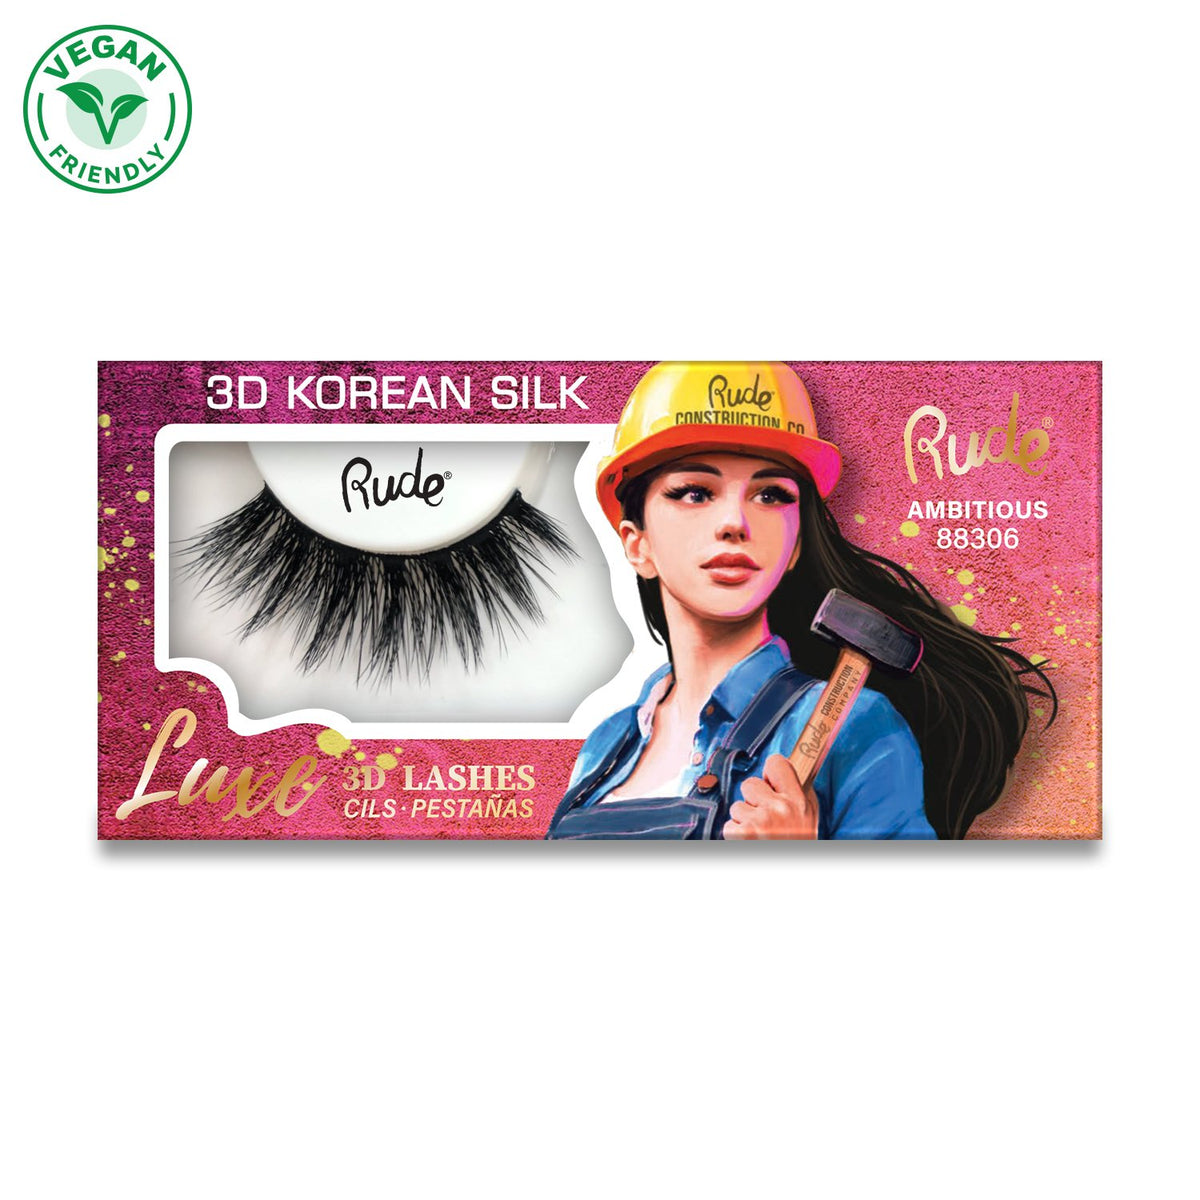 Luxe 3D Lashes | Premium 3D Eyelashes Ambitious